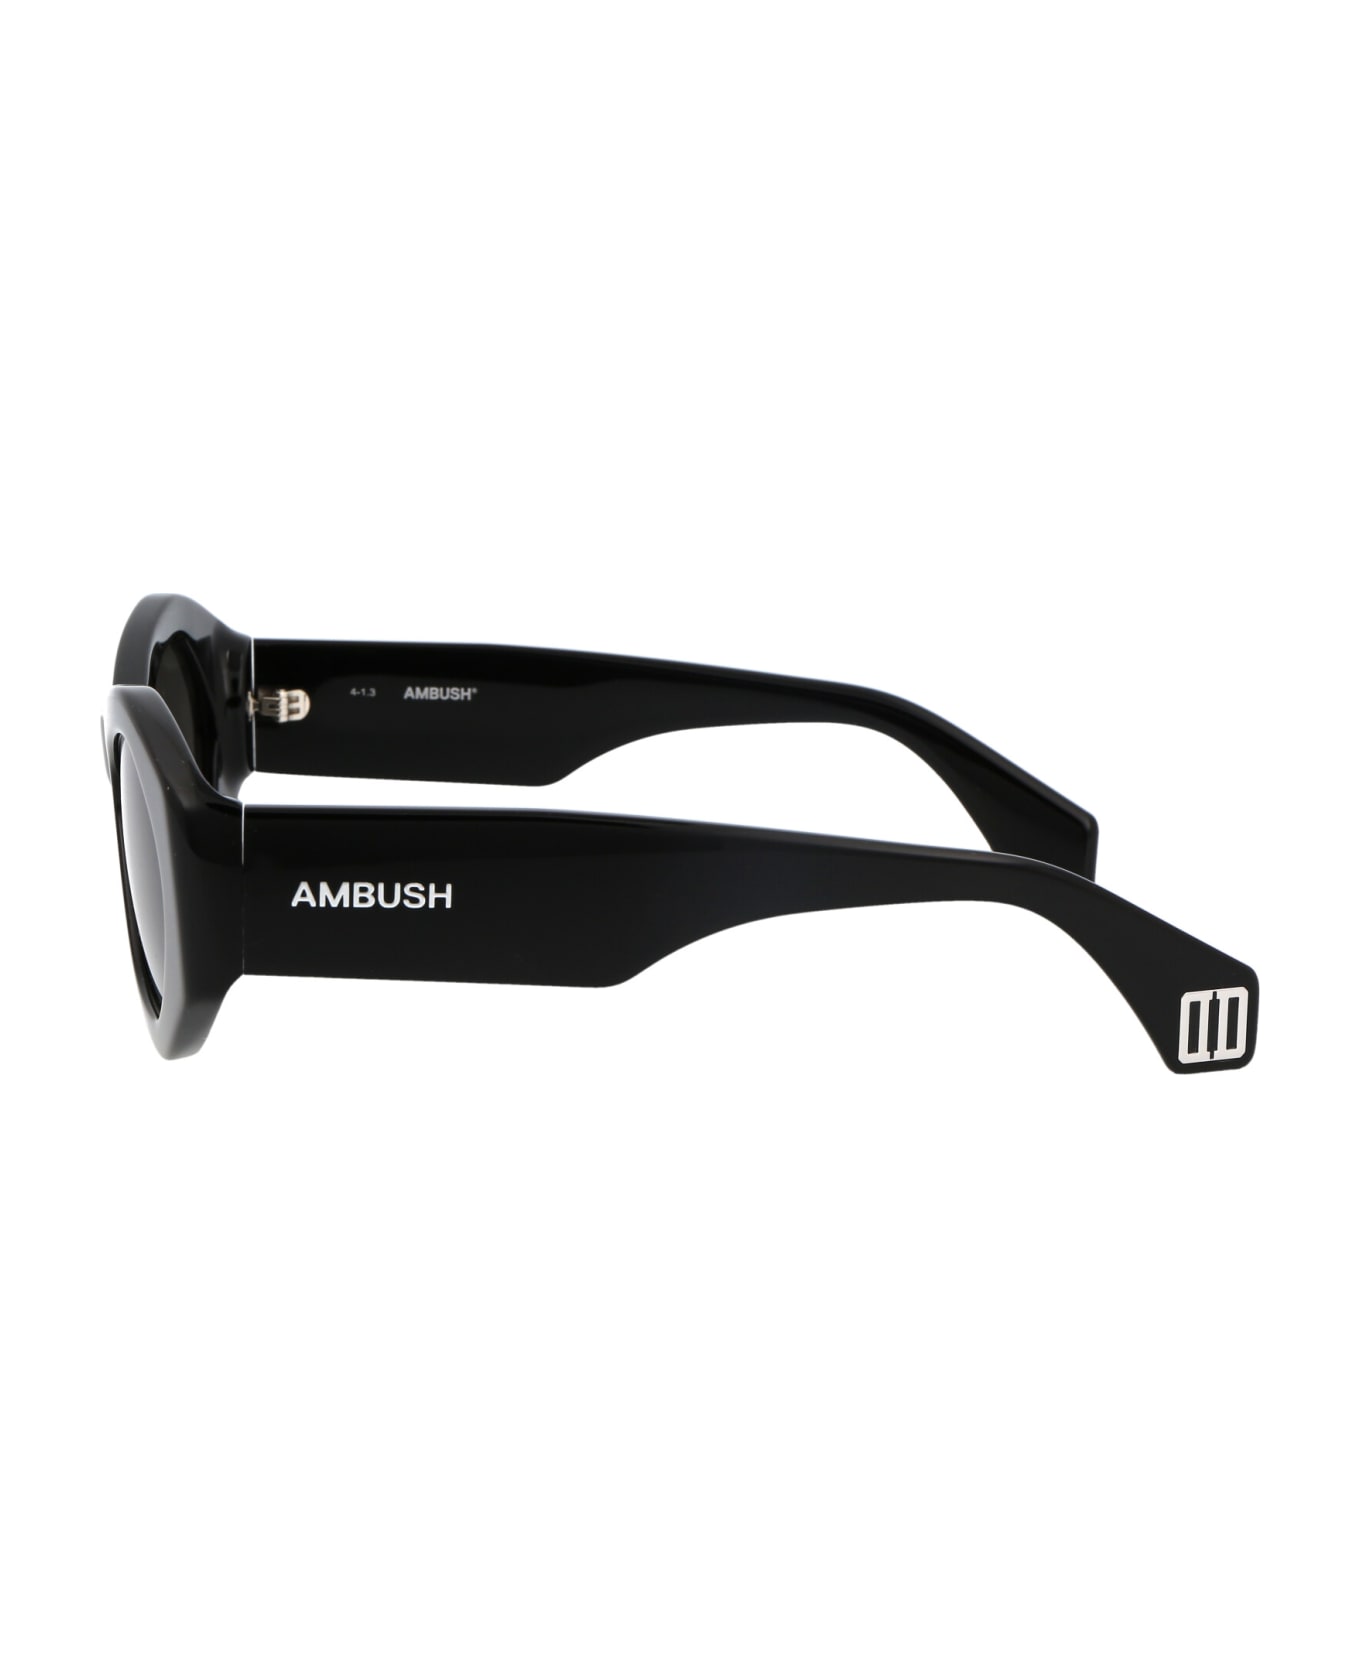 AMBUSH Pryzma Sunglasses - 1007 were craving stripes on everything from sunglasses to snakeskin handbags